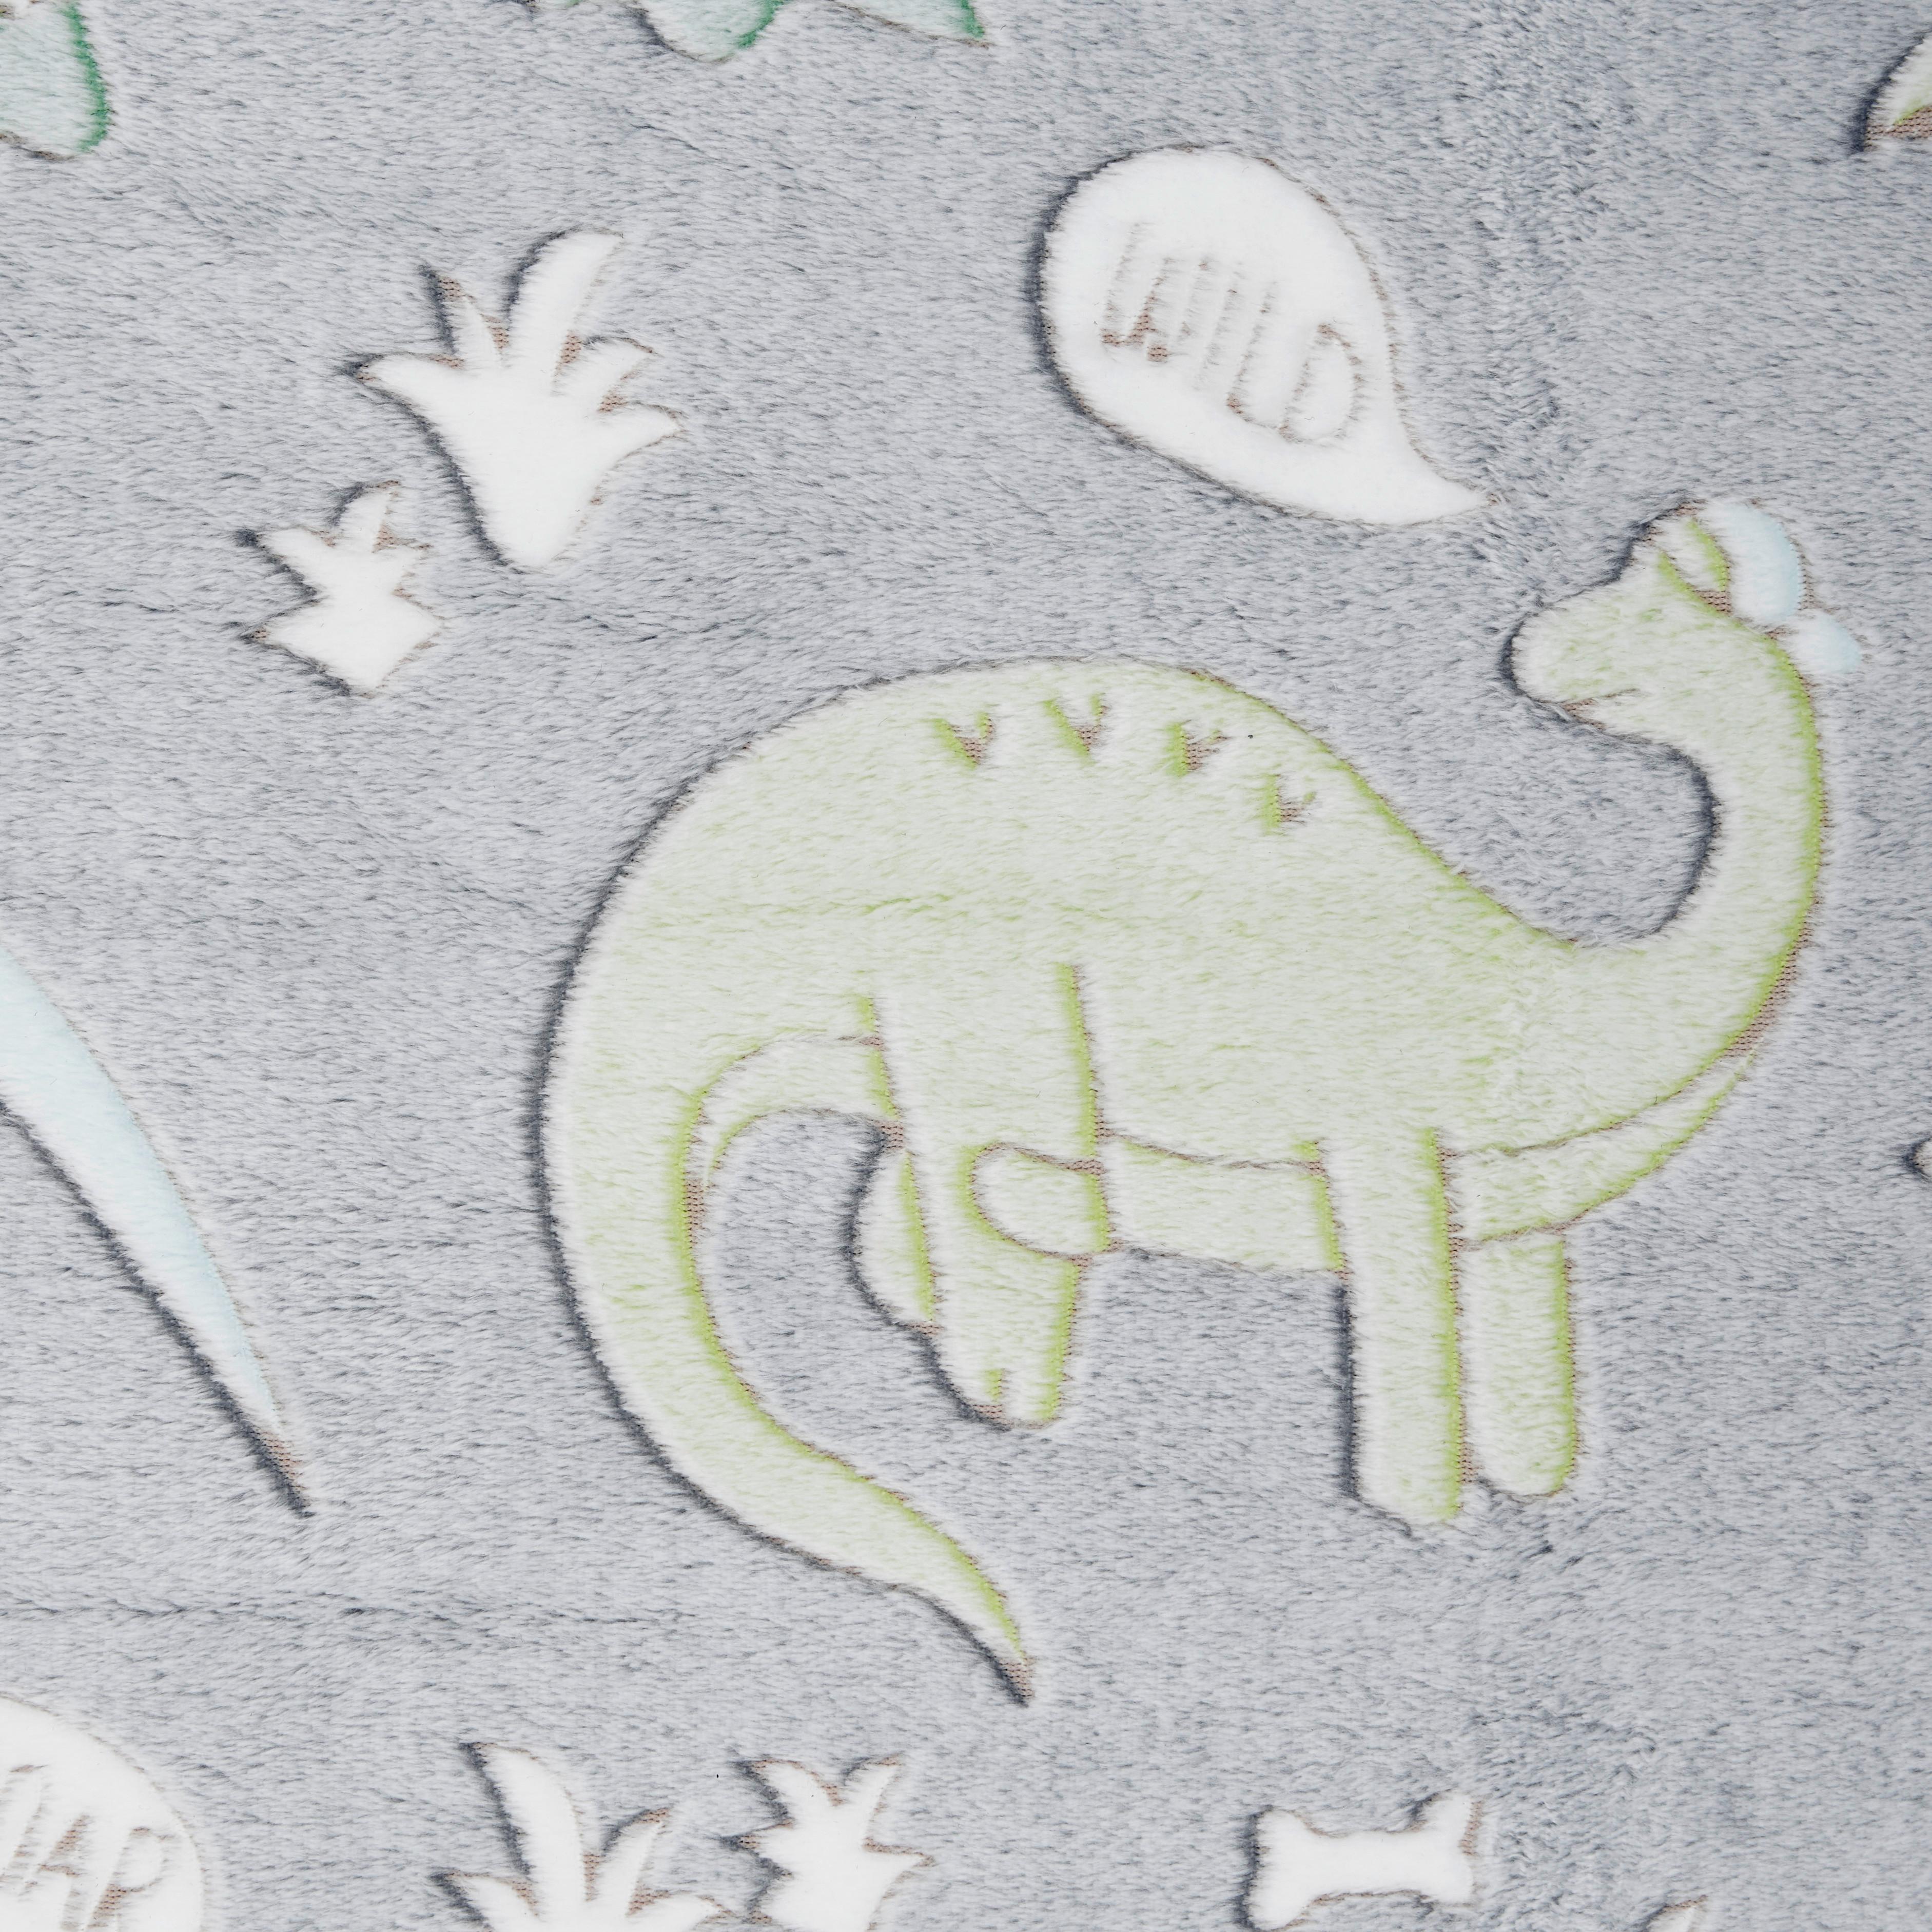 Kinderteppich Dino in Grau ca. 120x170cm - Grau, MODERN, Textil (120/170cm) - Modern Living